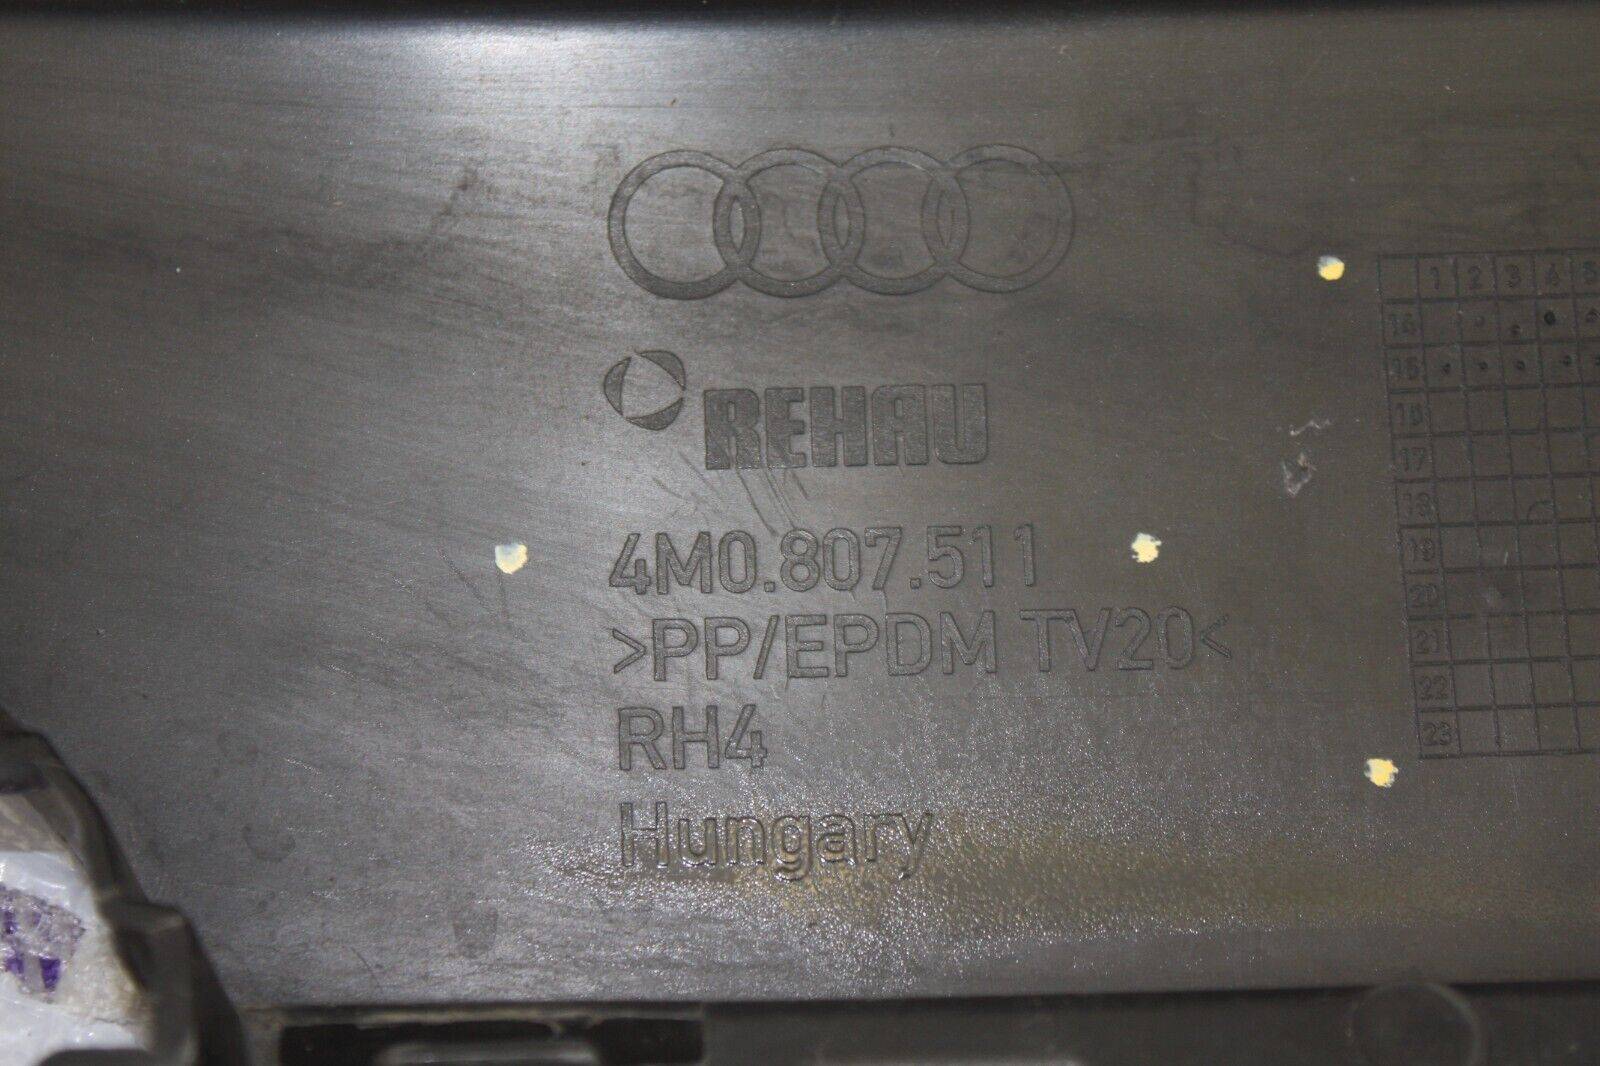 Audi-Q7-S-Line-Rear-Bumper-Upper-Section-2015-TO-2019-4M0807511-Genuine-DAMAGED-176390147360-9